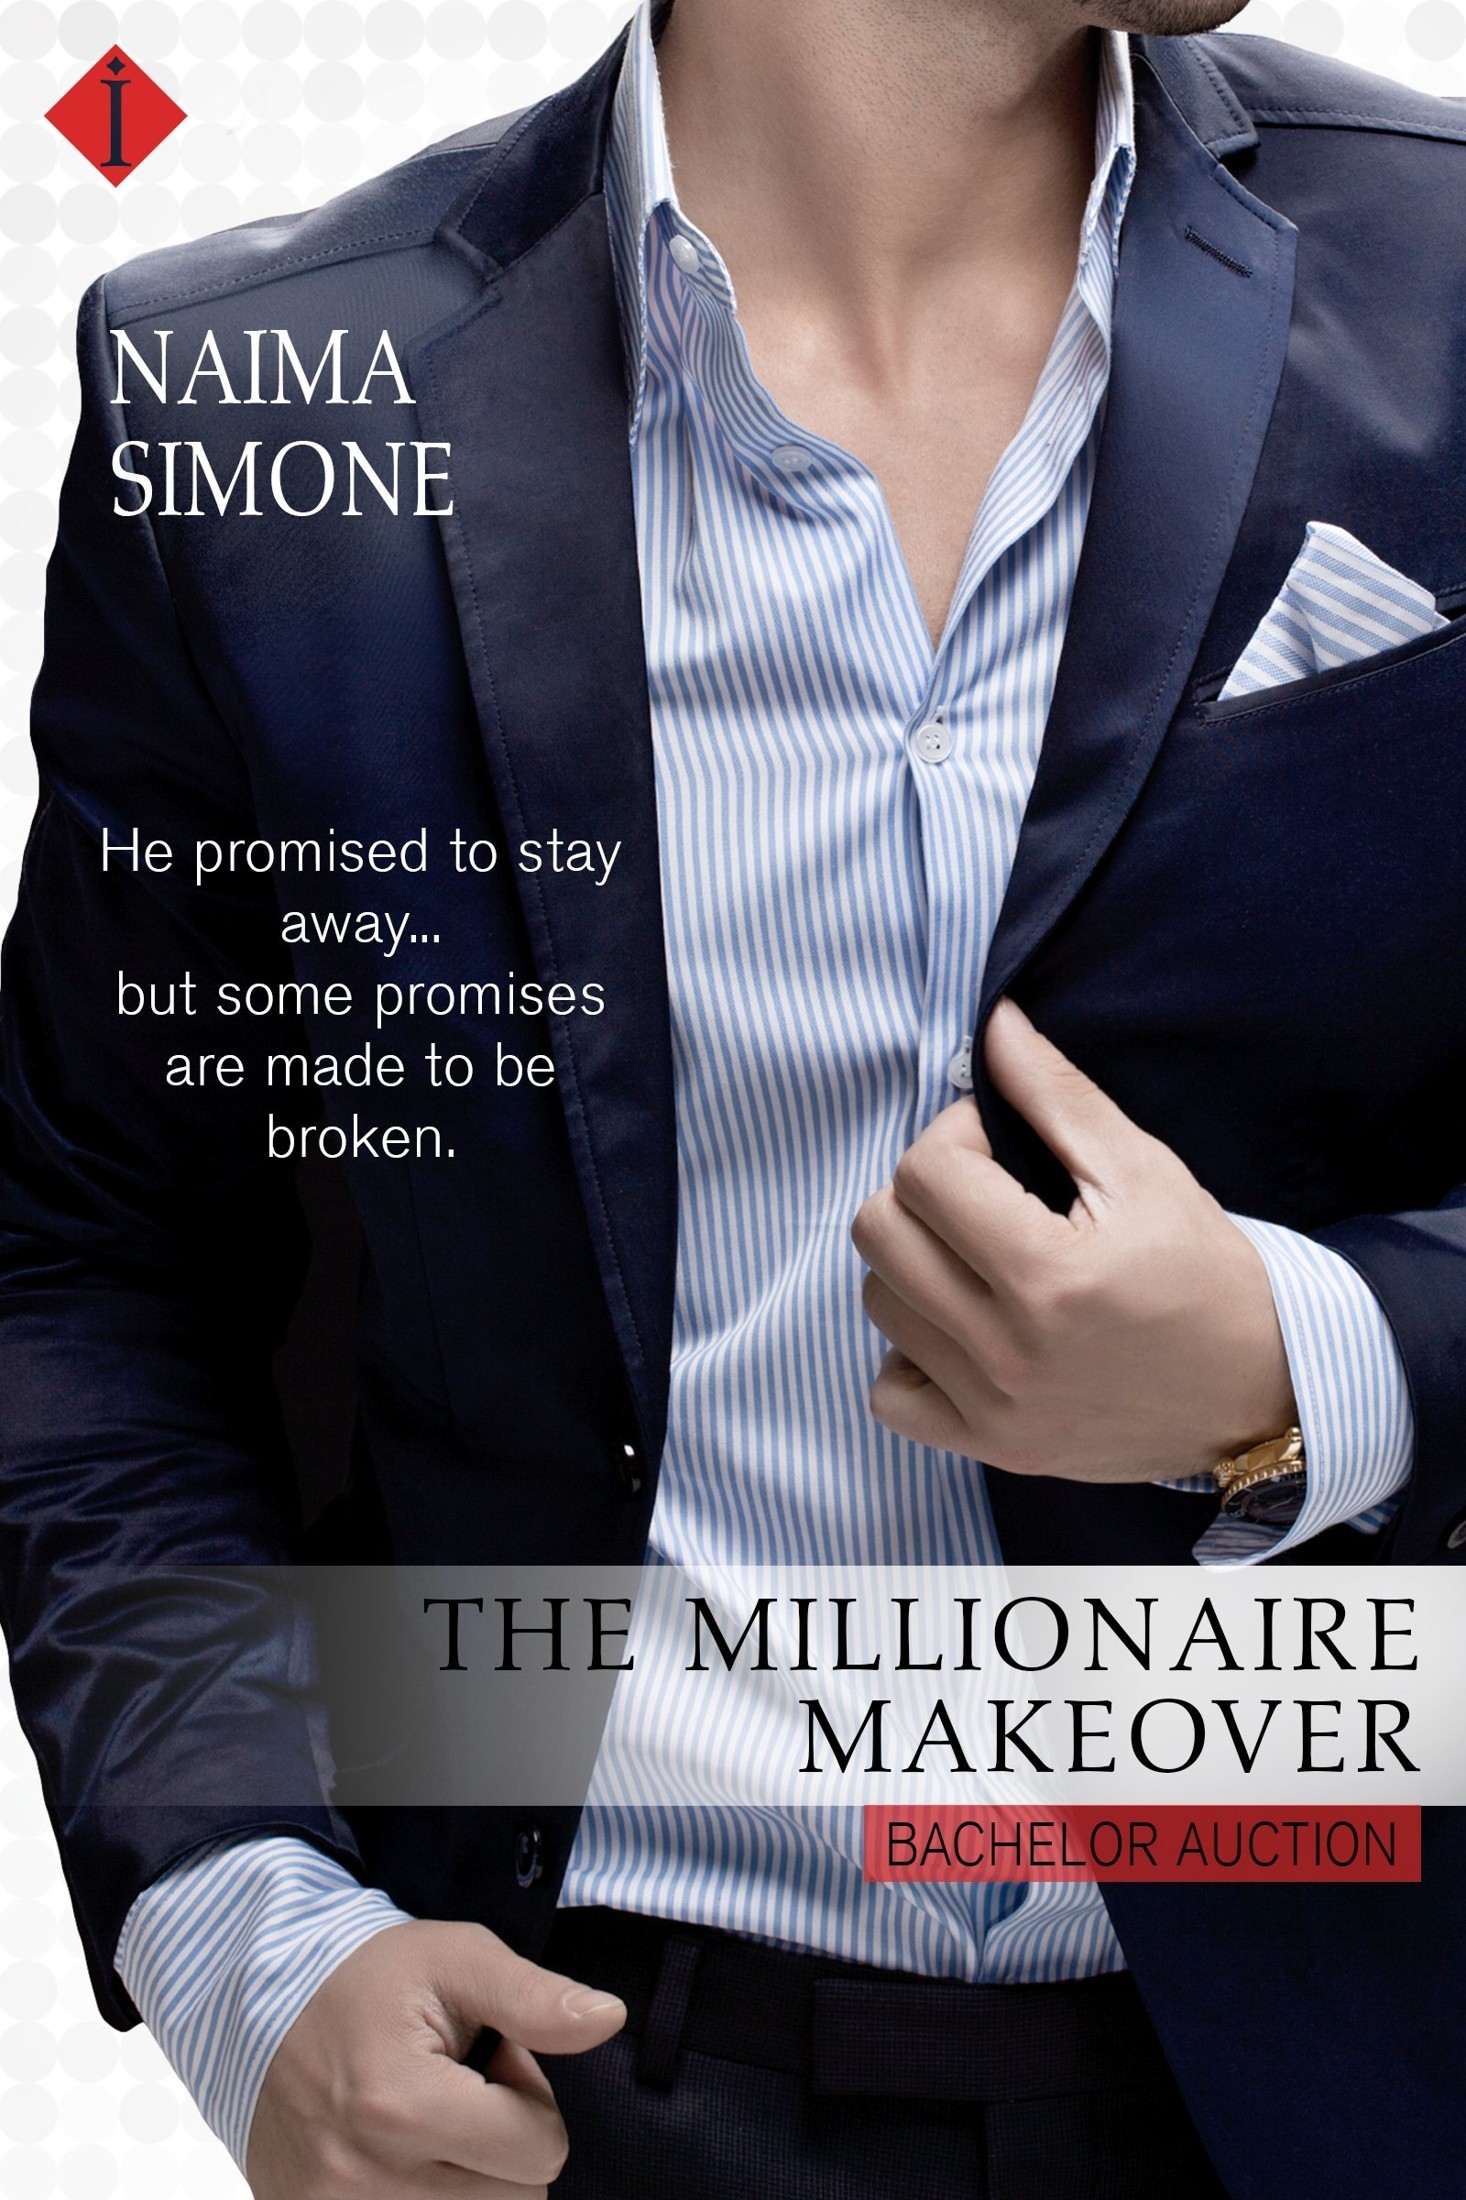 The Millionaire Makeover (Bachelor Auction)